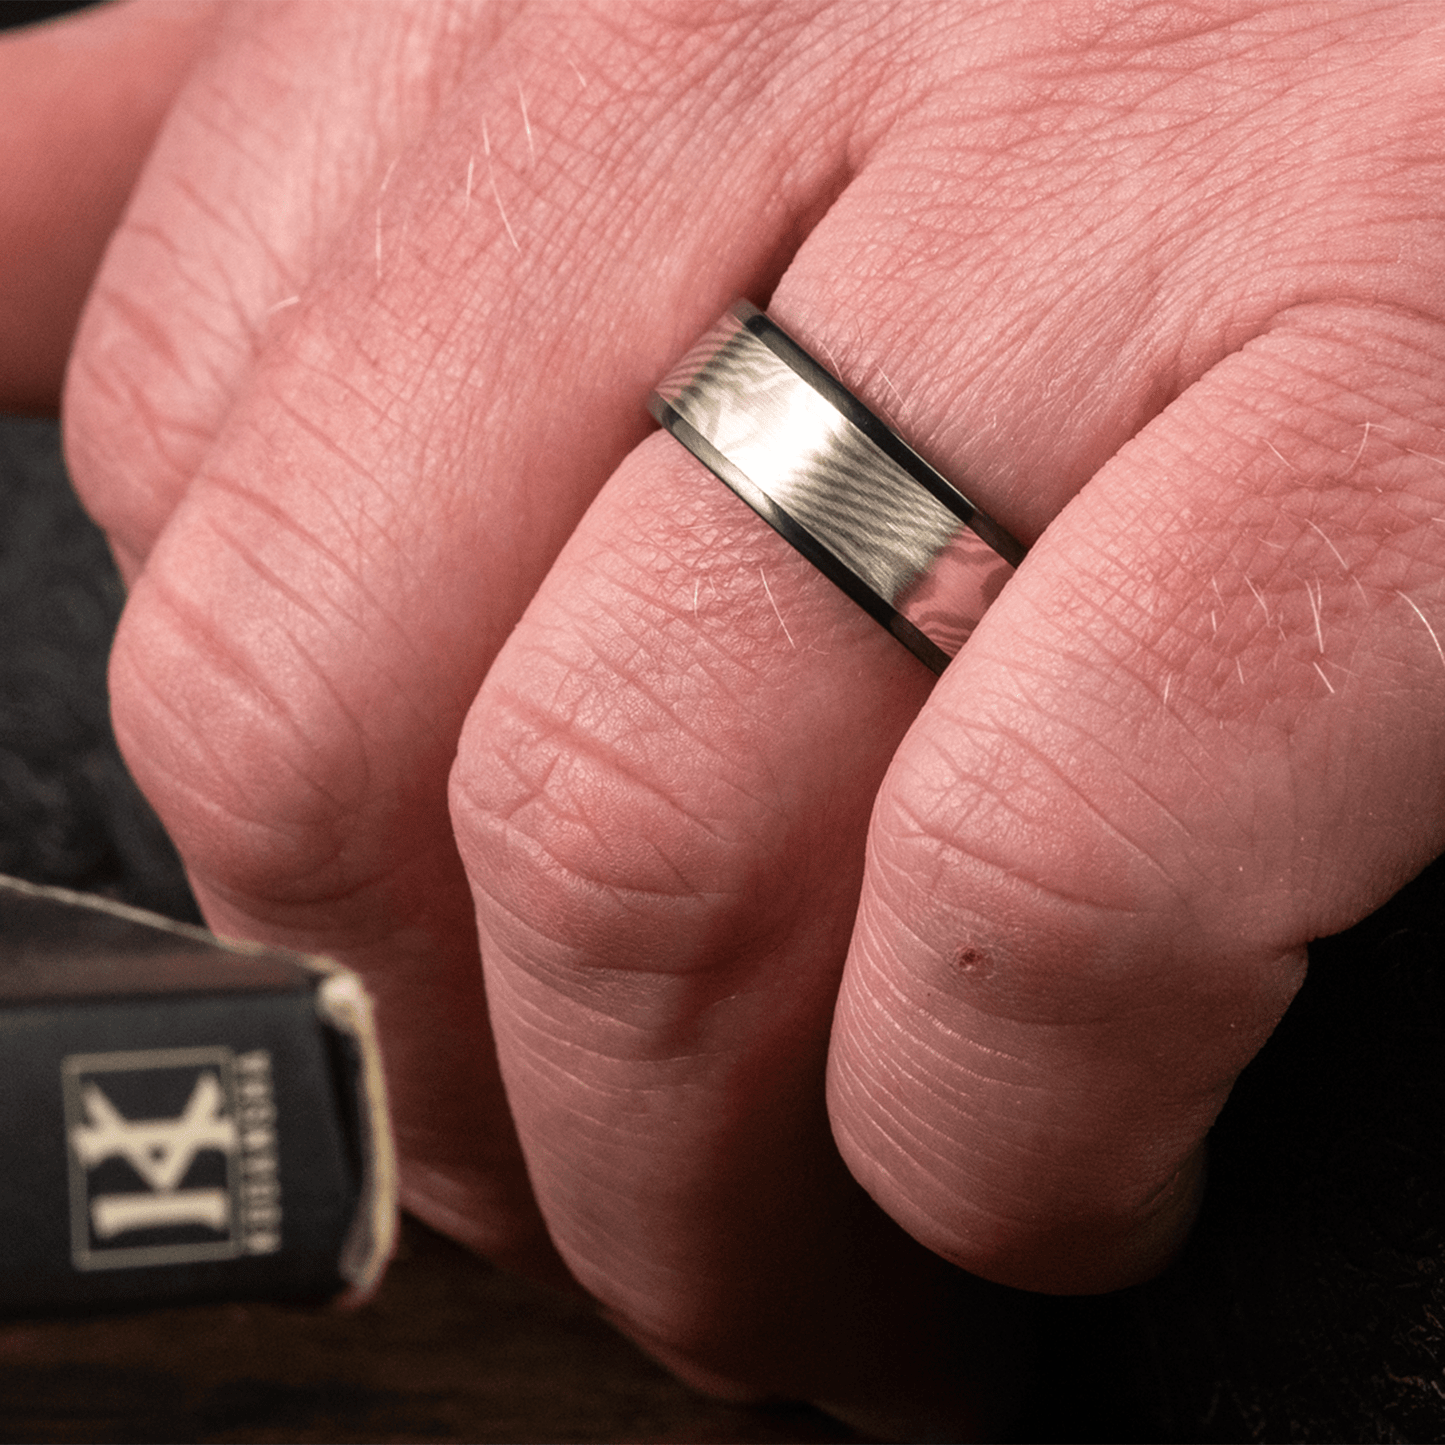 The Samurai - Men's Wedding Rings - Manly Bands